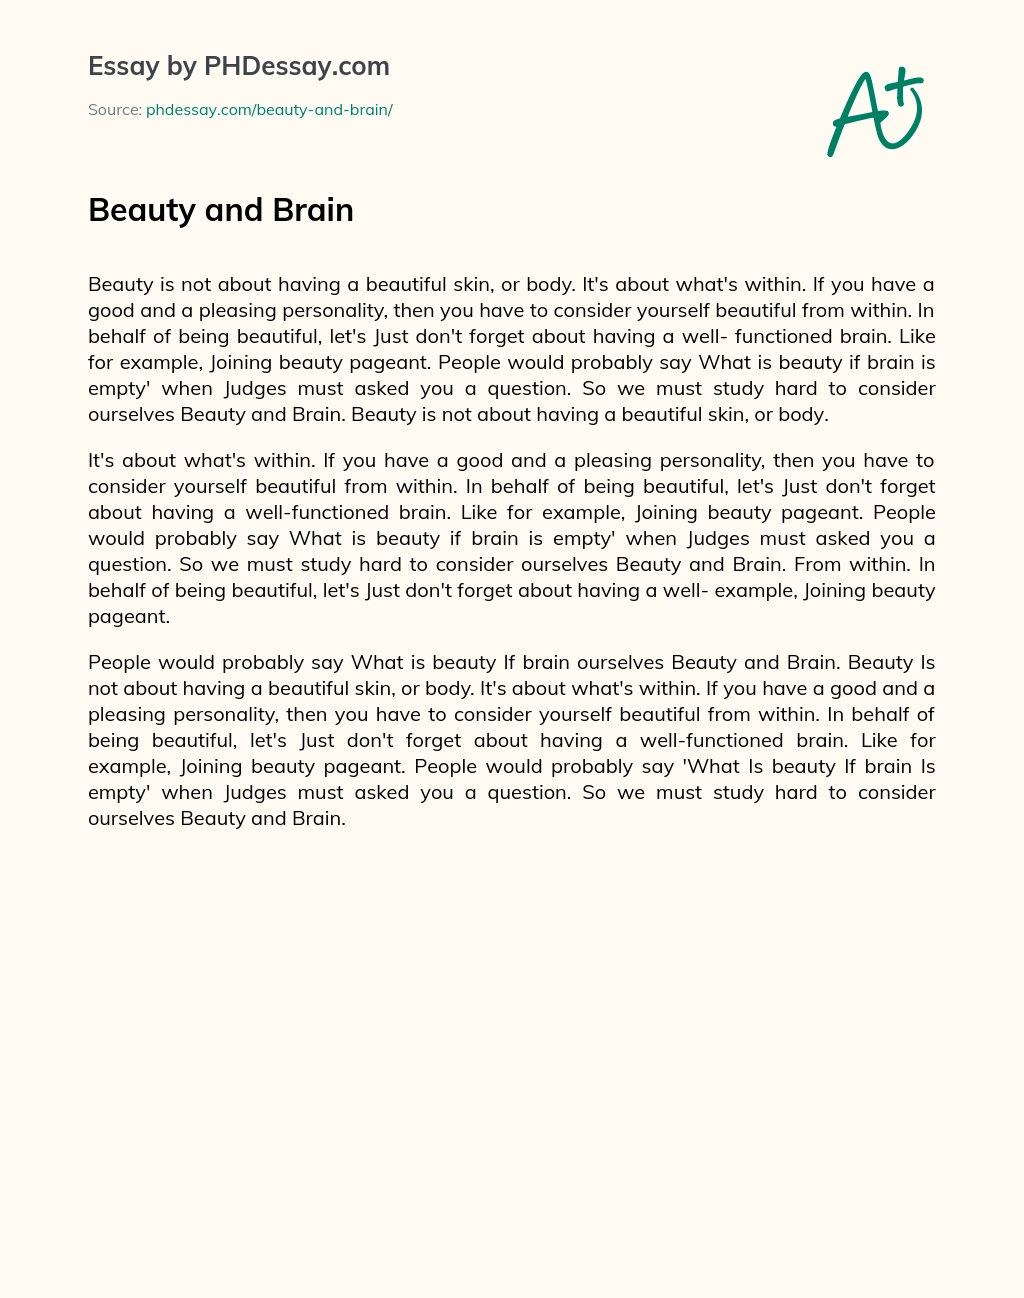 Beauty and Brain essay